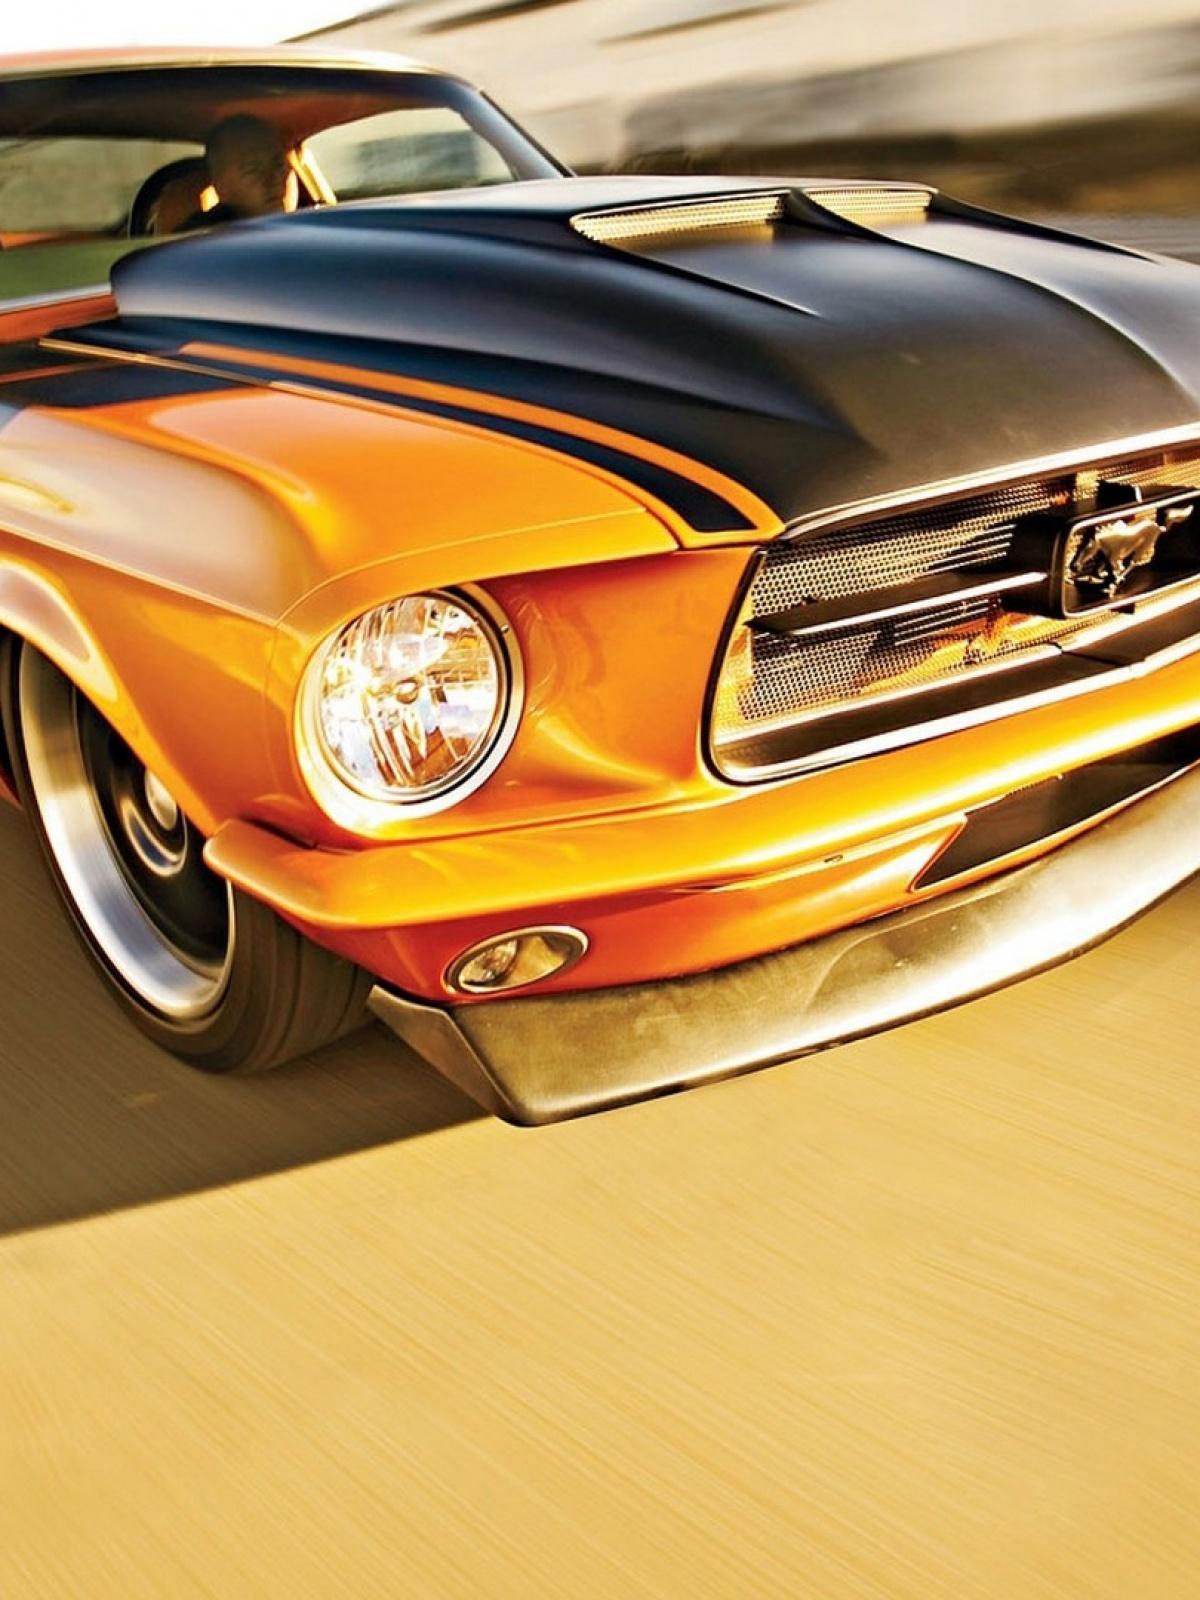 Ford Mustang Mobile Wallpaper